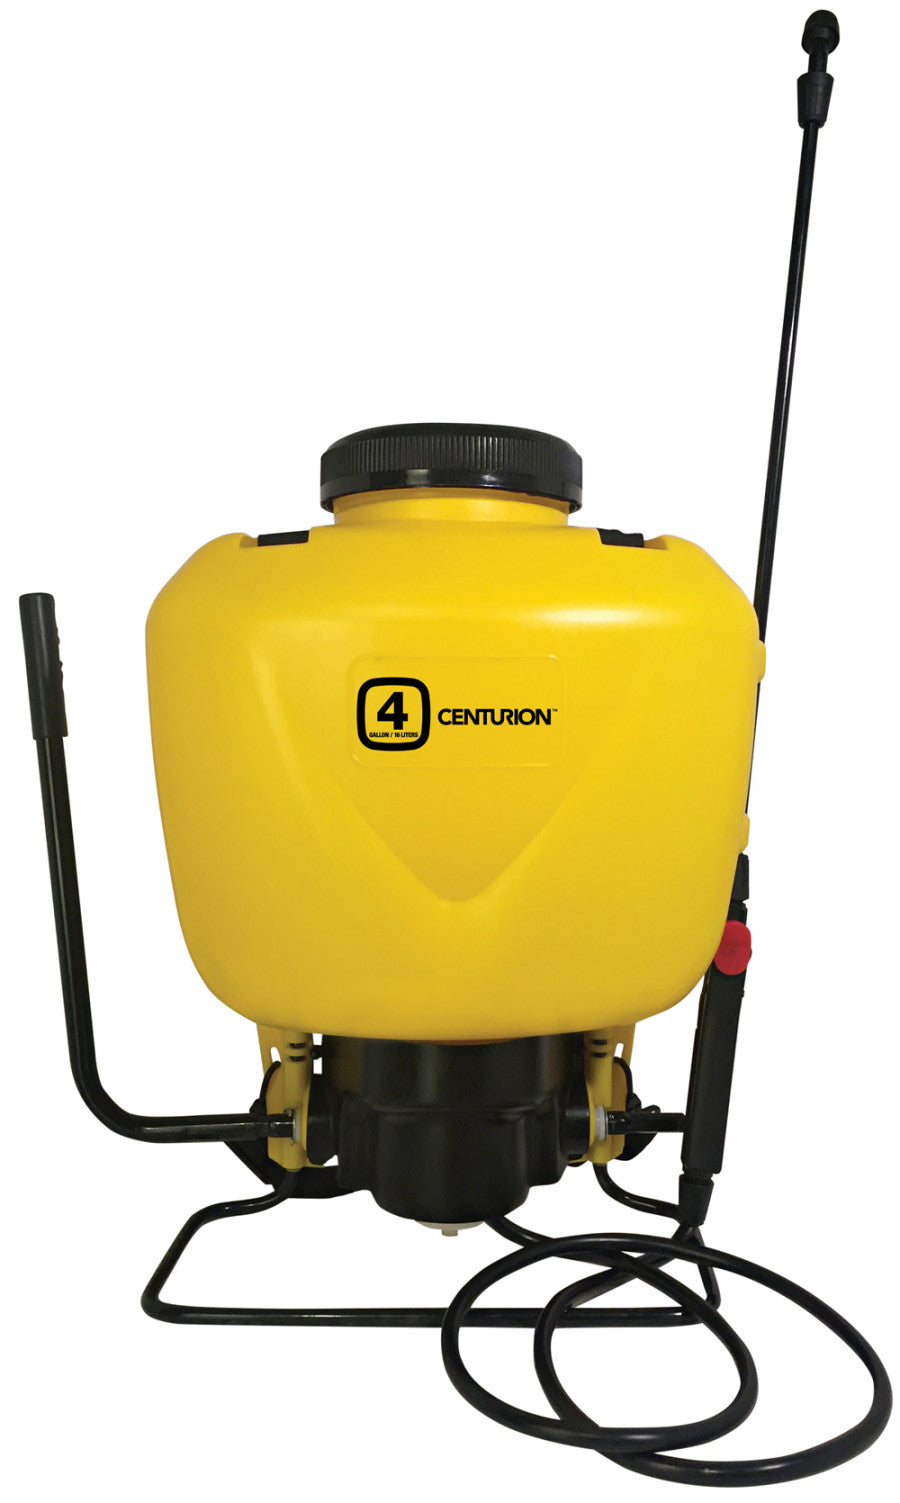 CENTURION, Central Garden & Pet Company Centurion Multi-Hand Backpack Garden Pressure Sprayer 4ft Hose Yellow 1ea/4 gal